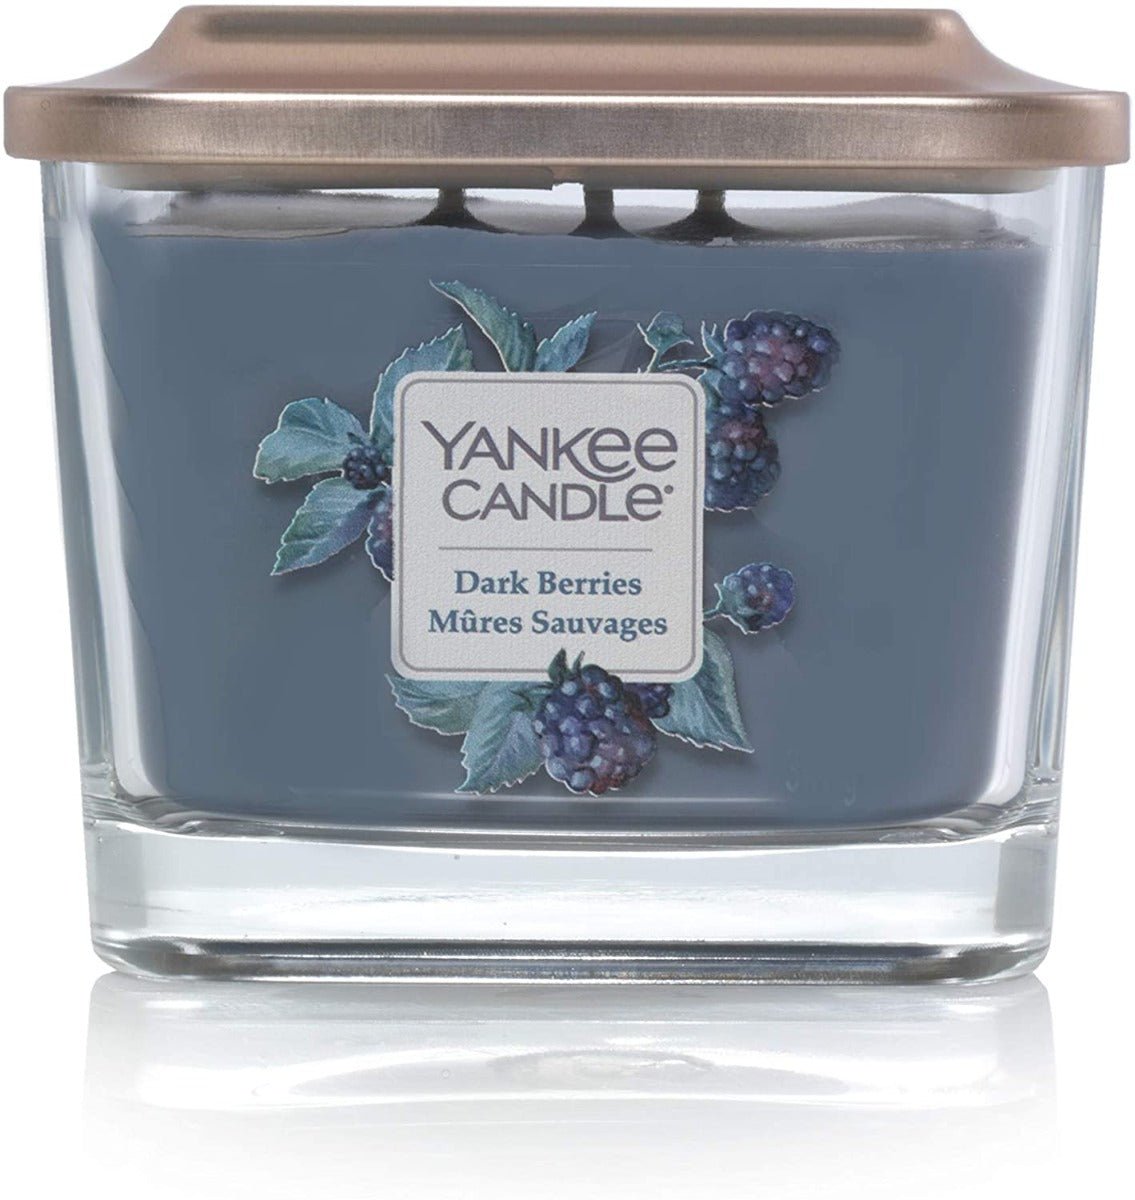 Yankee Candle Medium Square Candle with Wicks Dark Berries - AllurebeautypkYankee Candle Medium Square Candle with Wicks Dark Berries